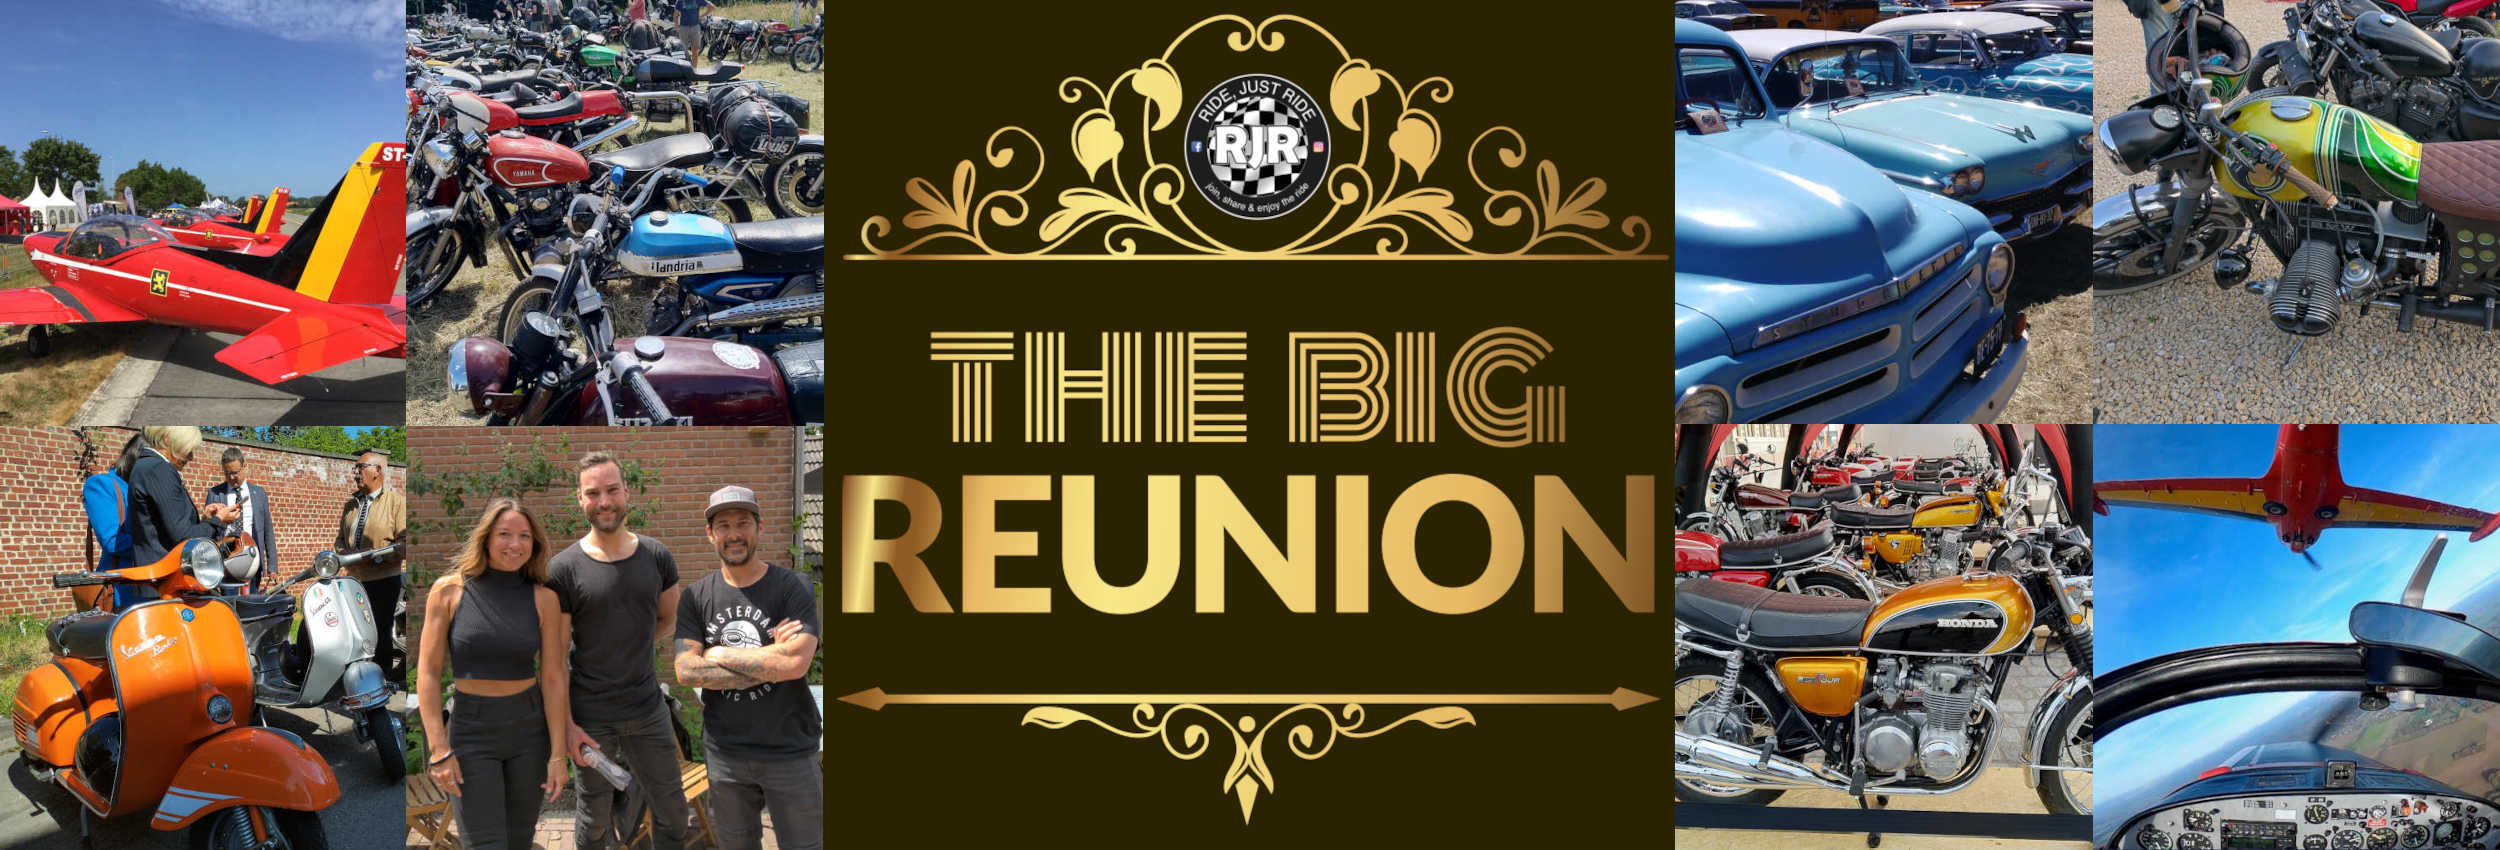 The big Reunion